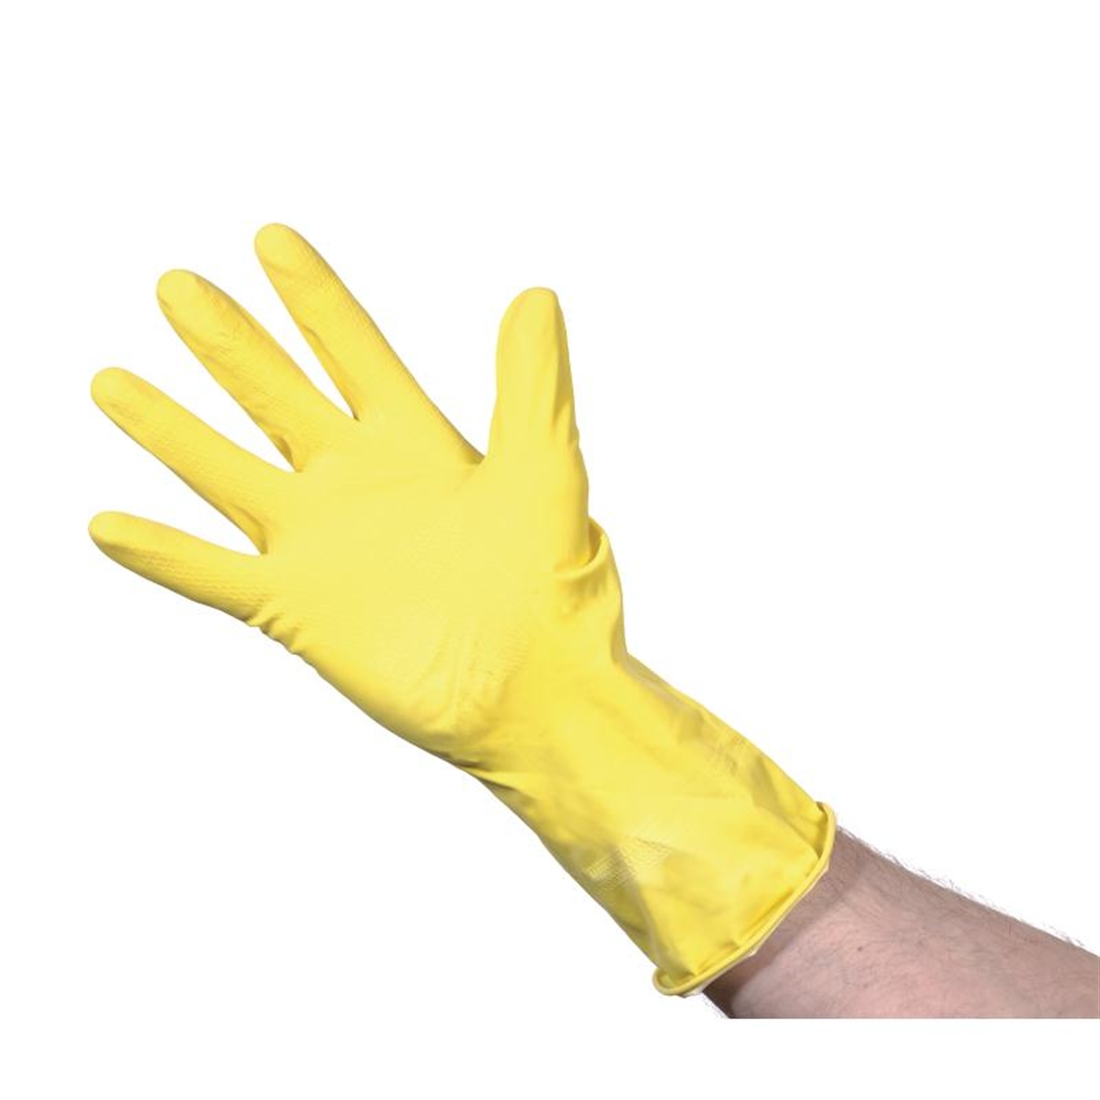 Jantex Household Glove Yellow Small